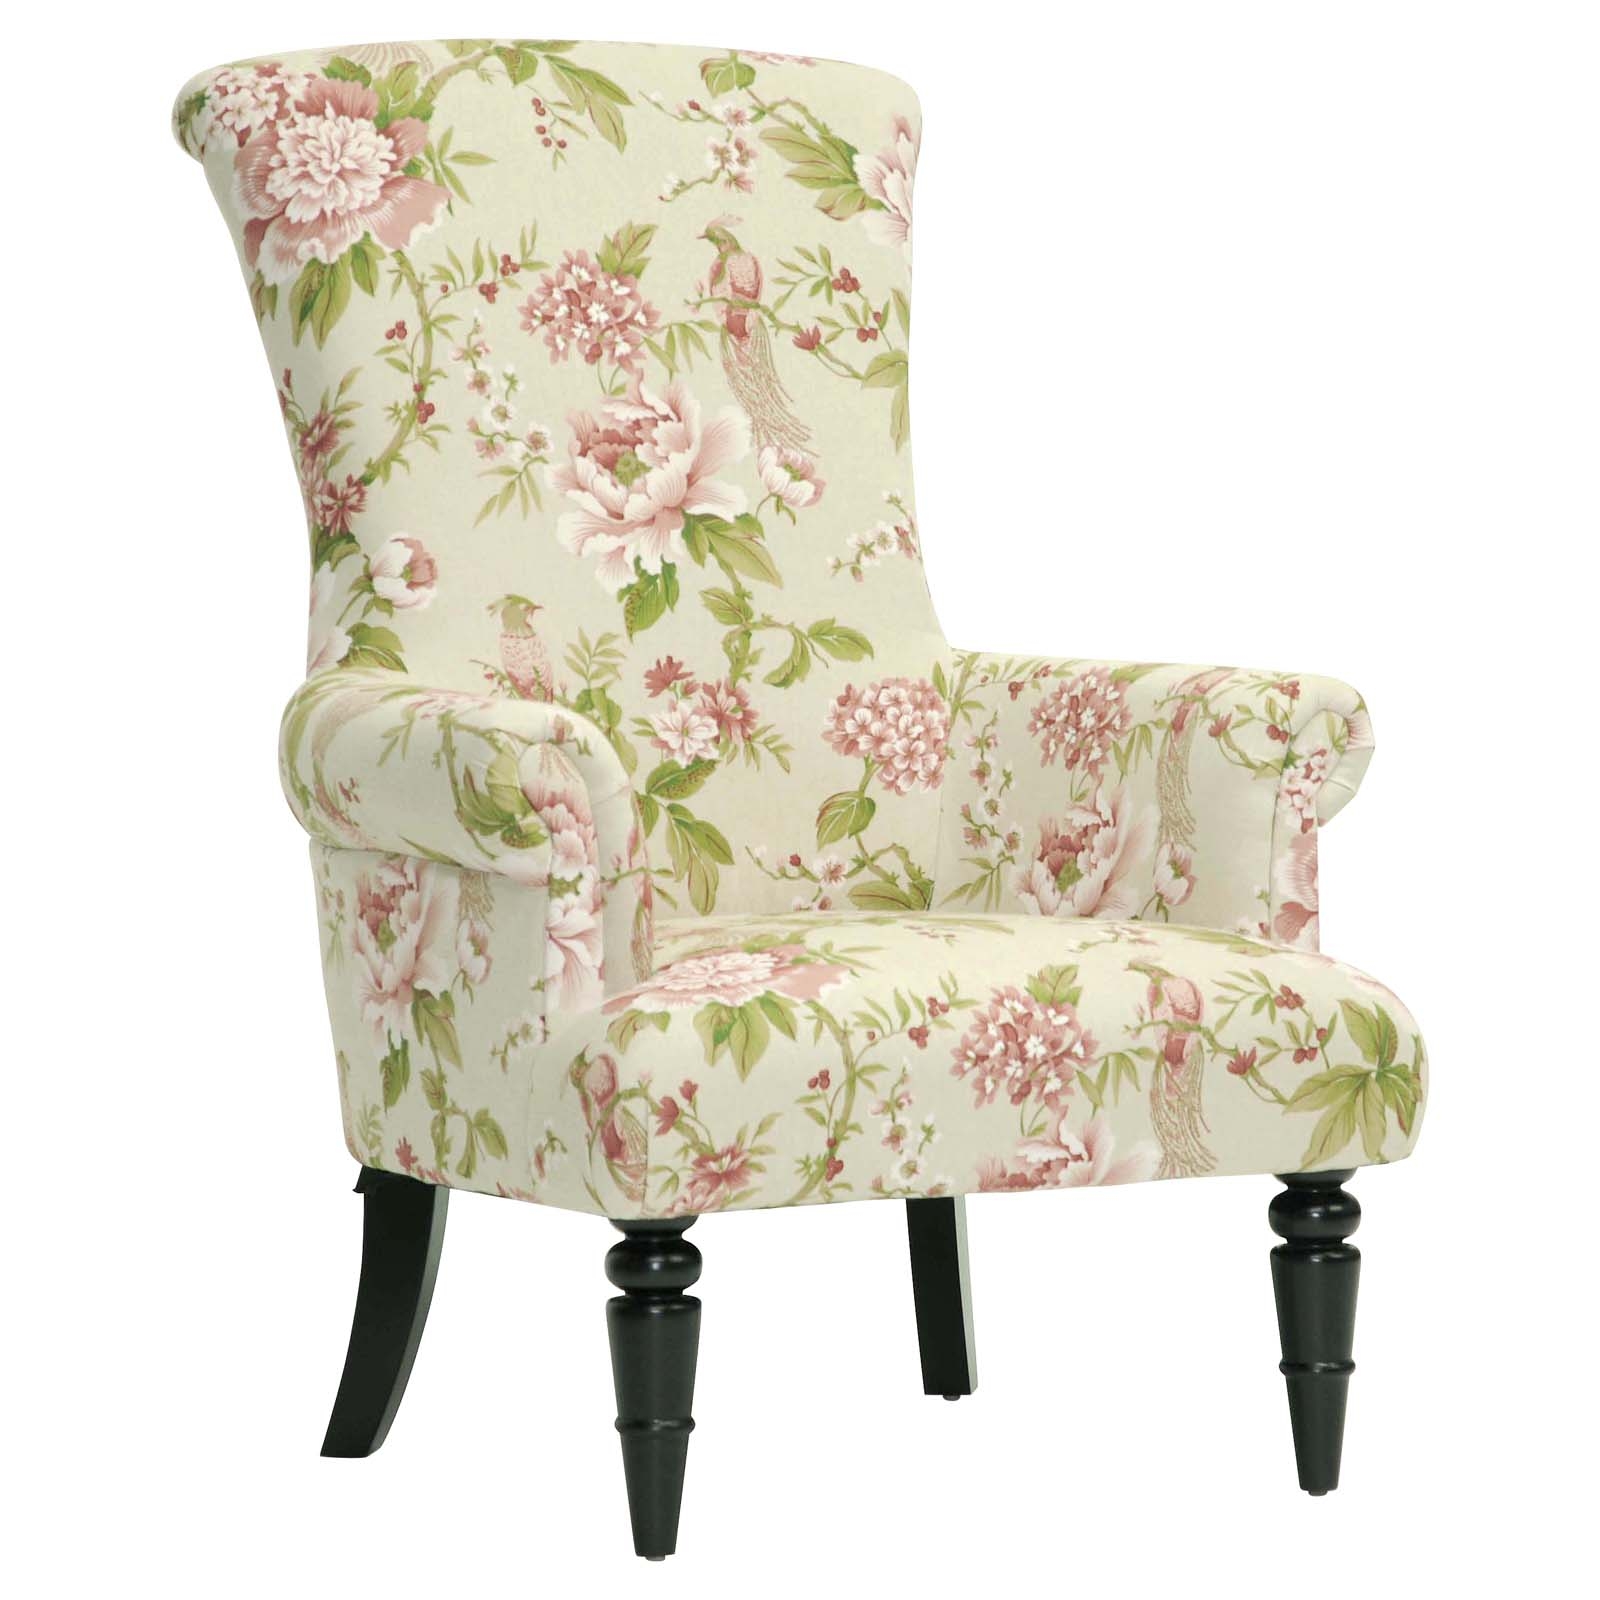 Baxton Studio Kimmett Linen Floral Accent Chair, Beige/Pink